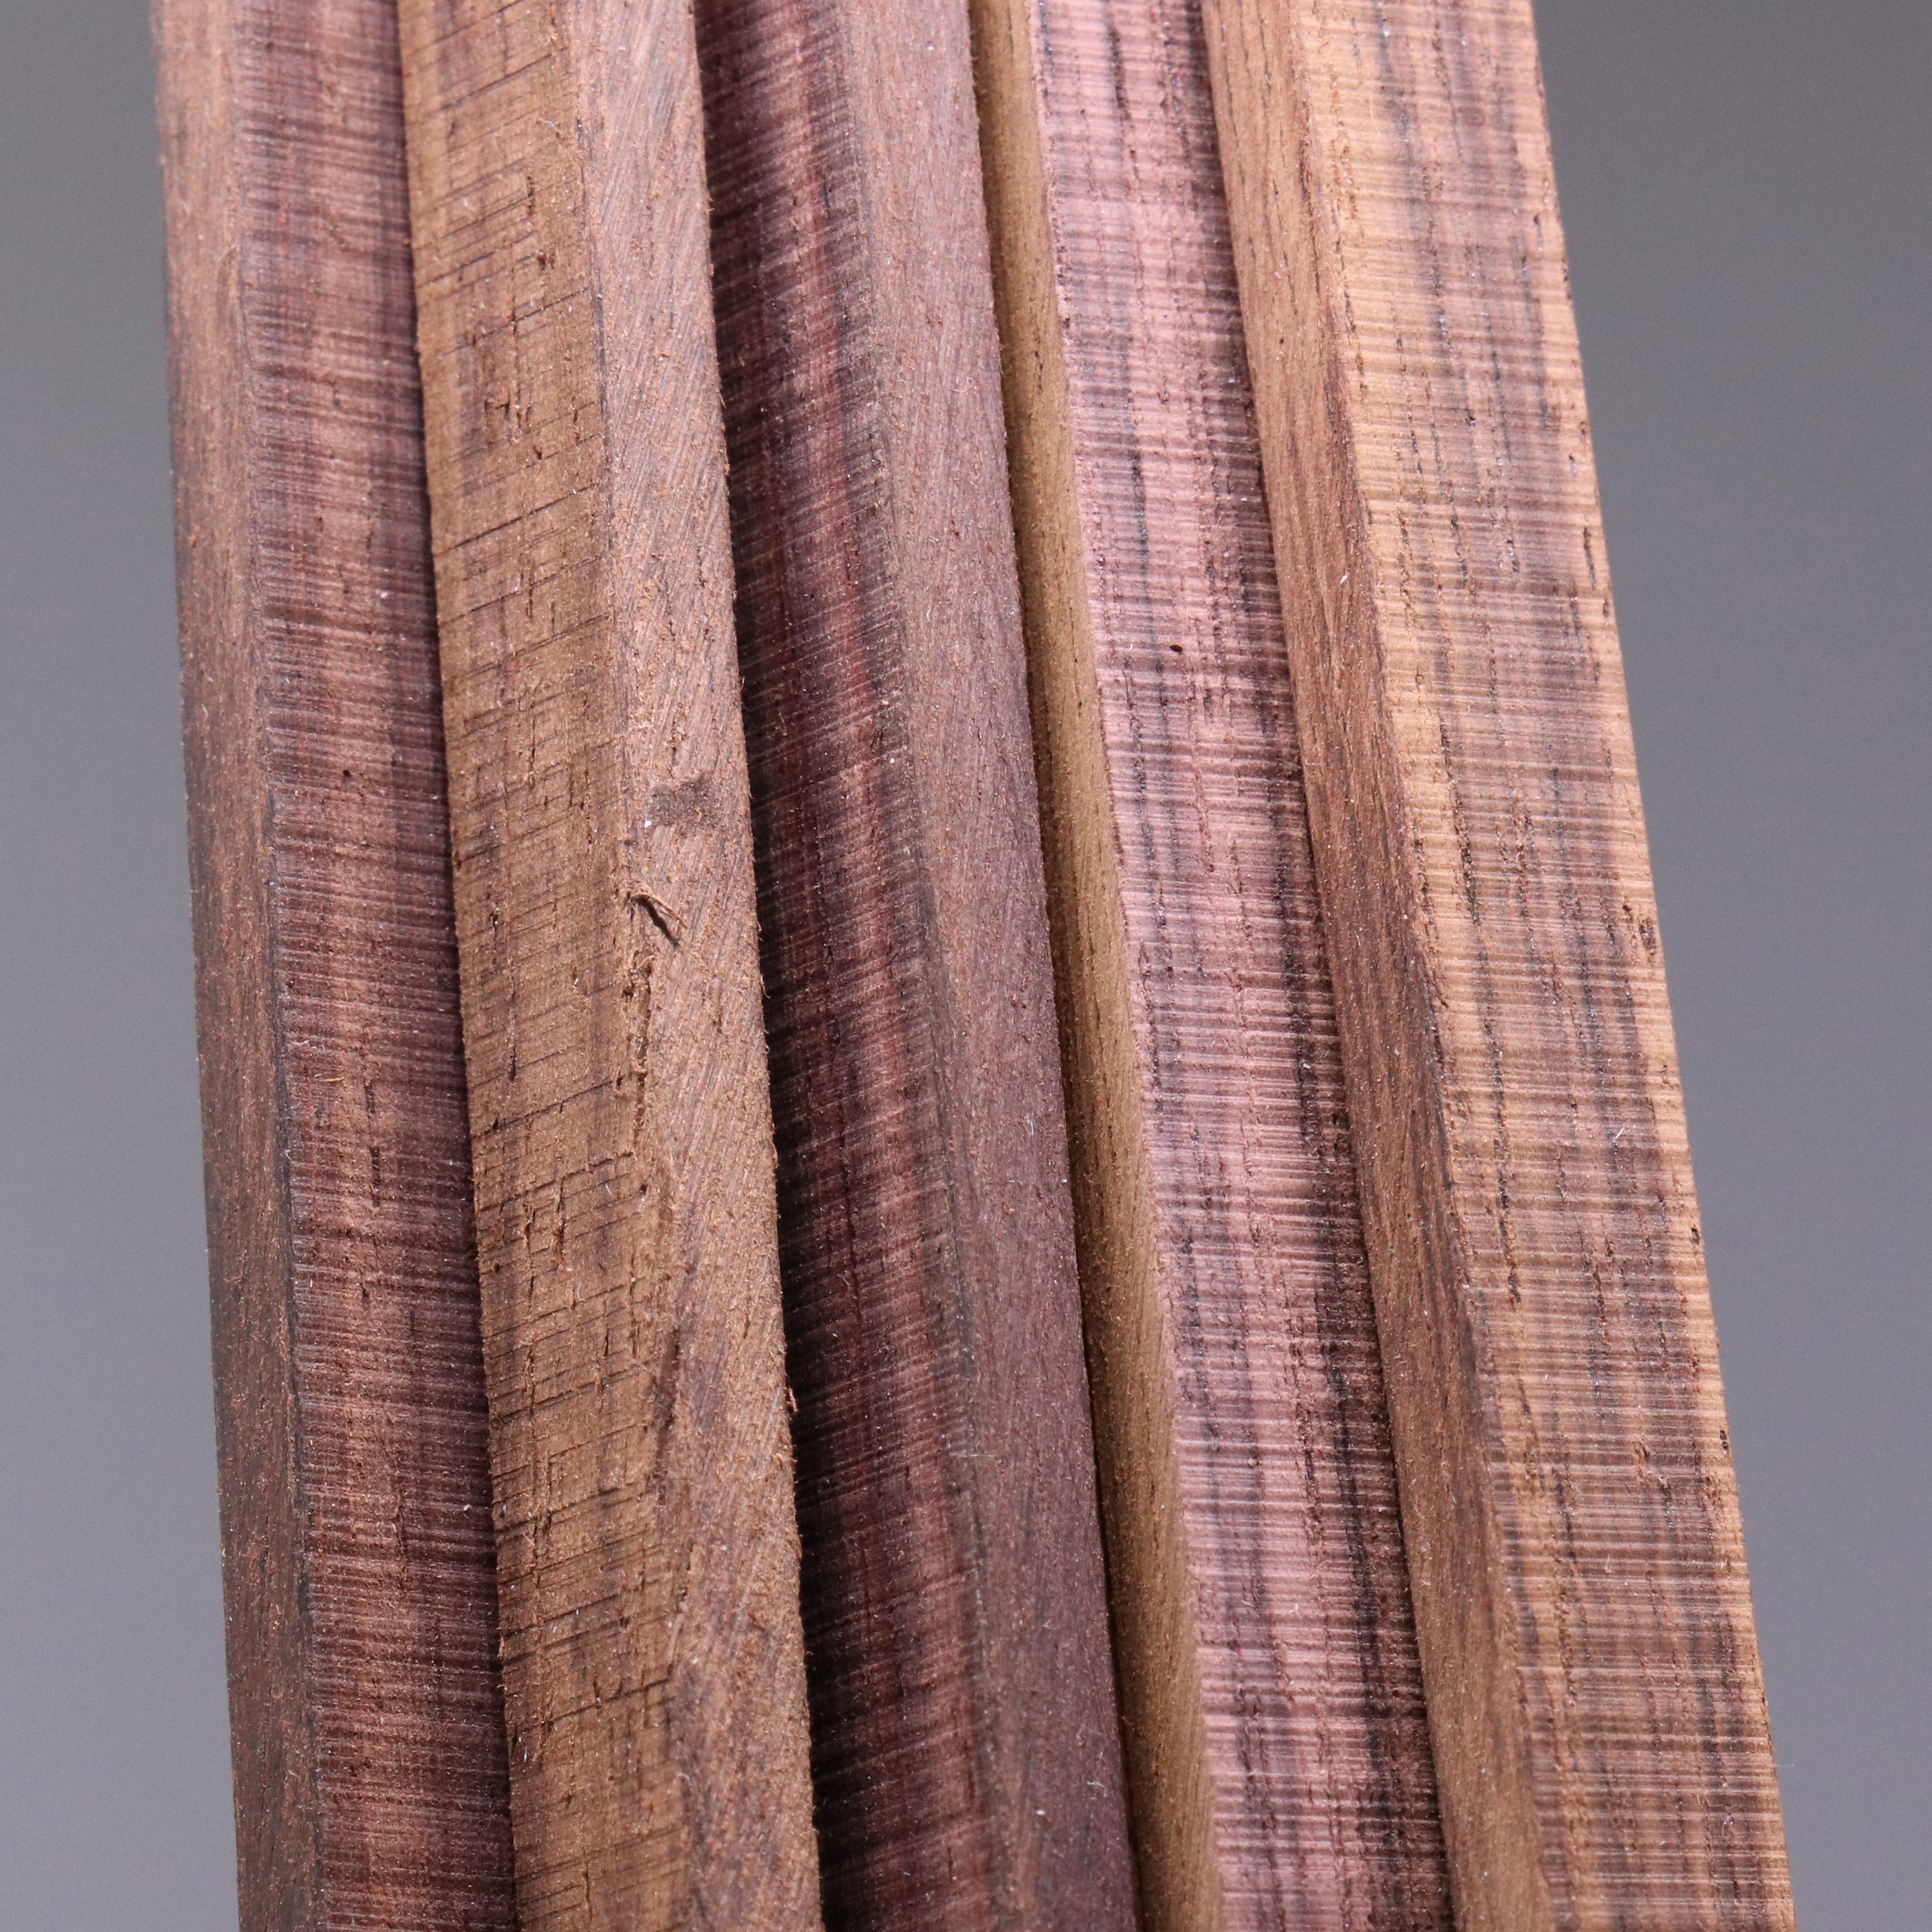 Indian Rosewood backstrips x .160" x 22.5"